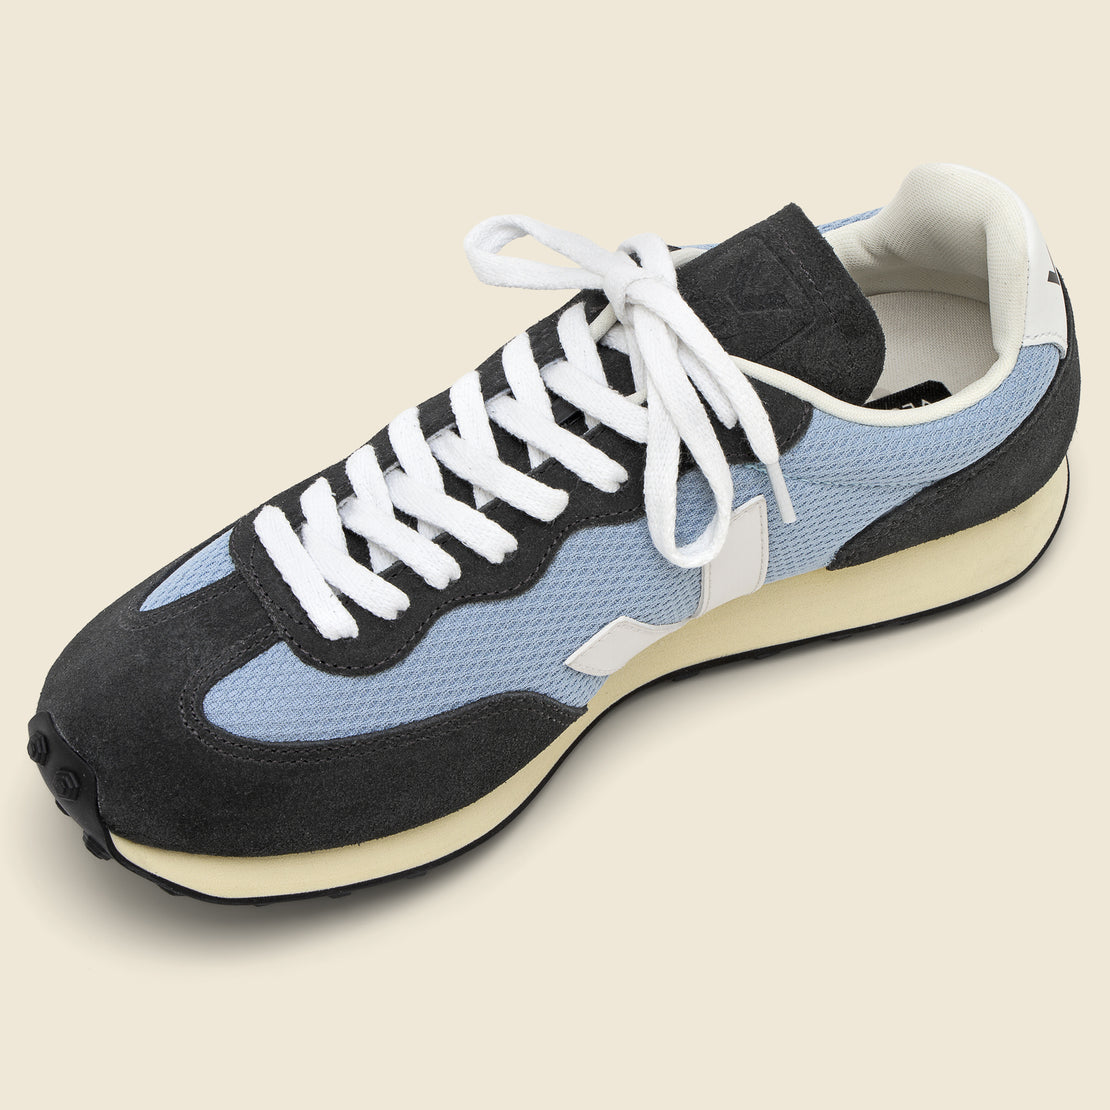 Rio Branco Alveomesh Sneaker - Steel White - Veja - STAG Provisions - Shoes - Athletic